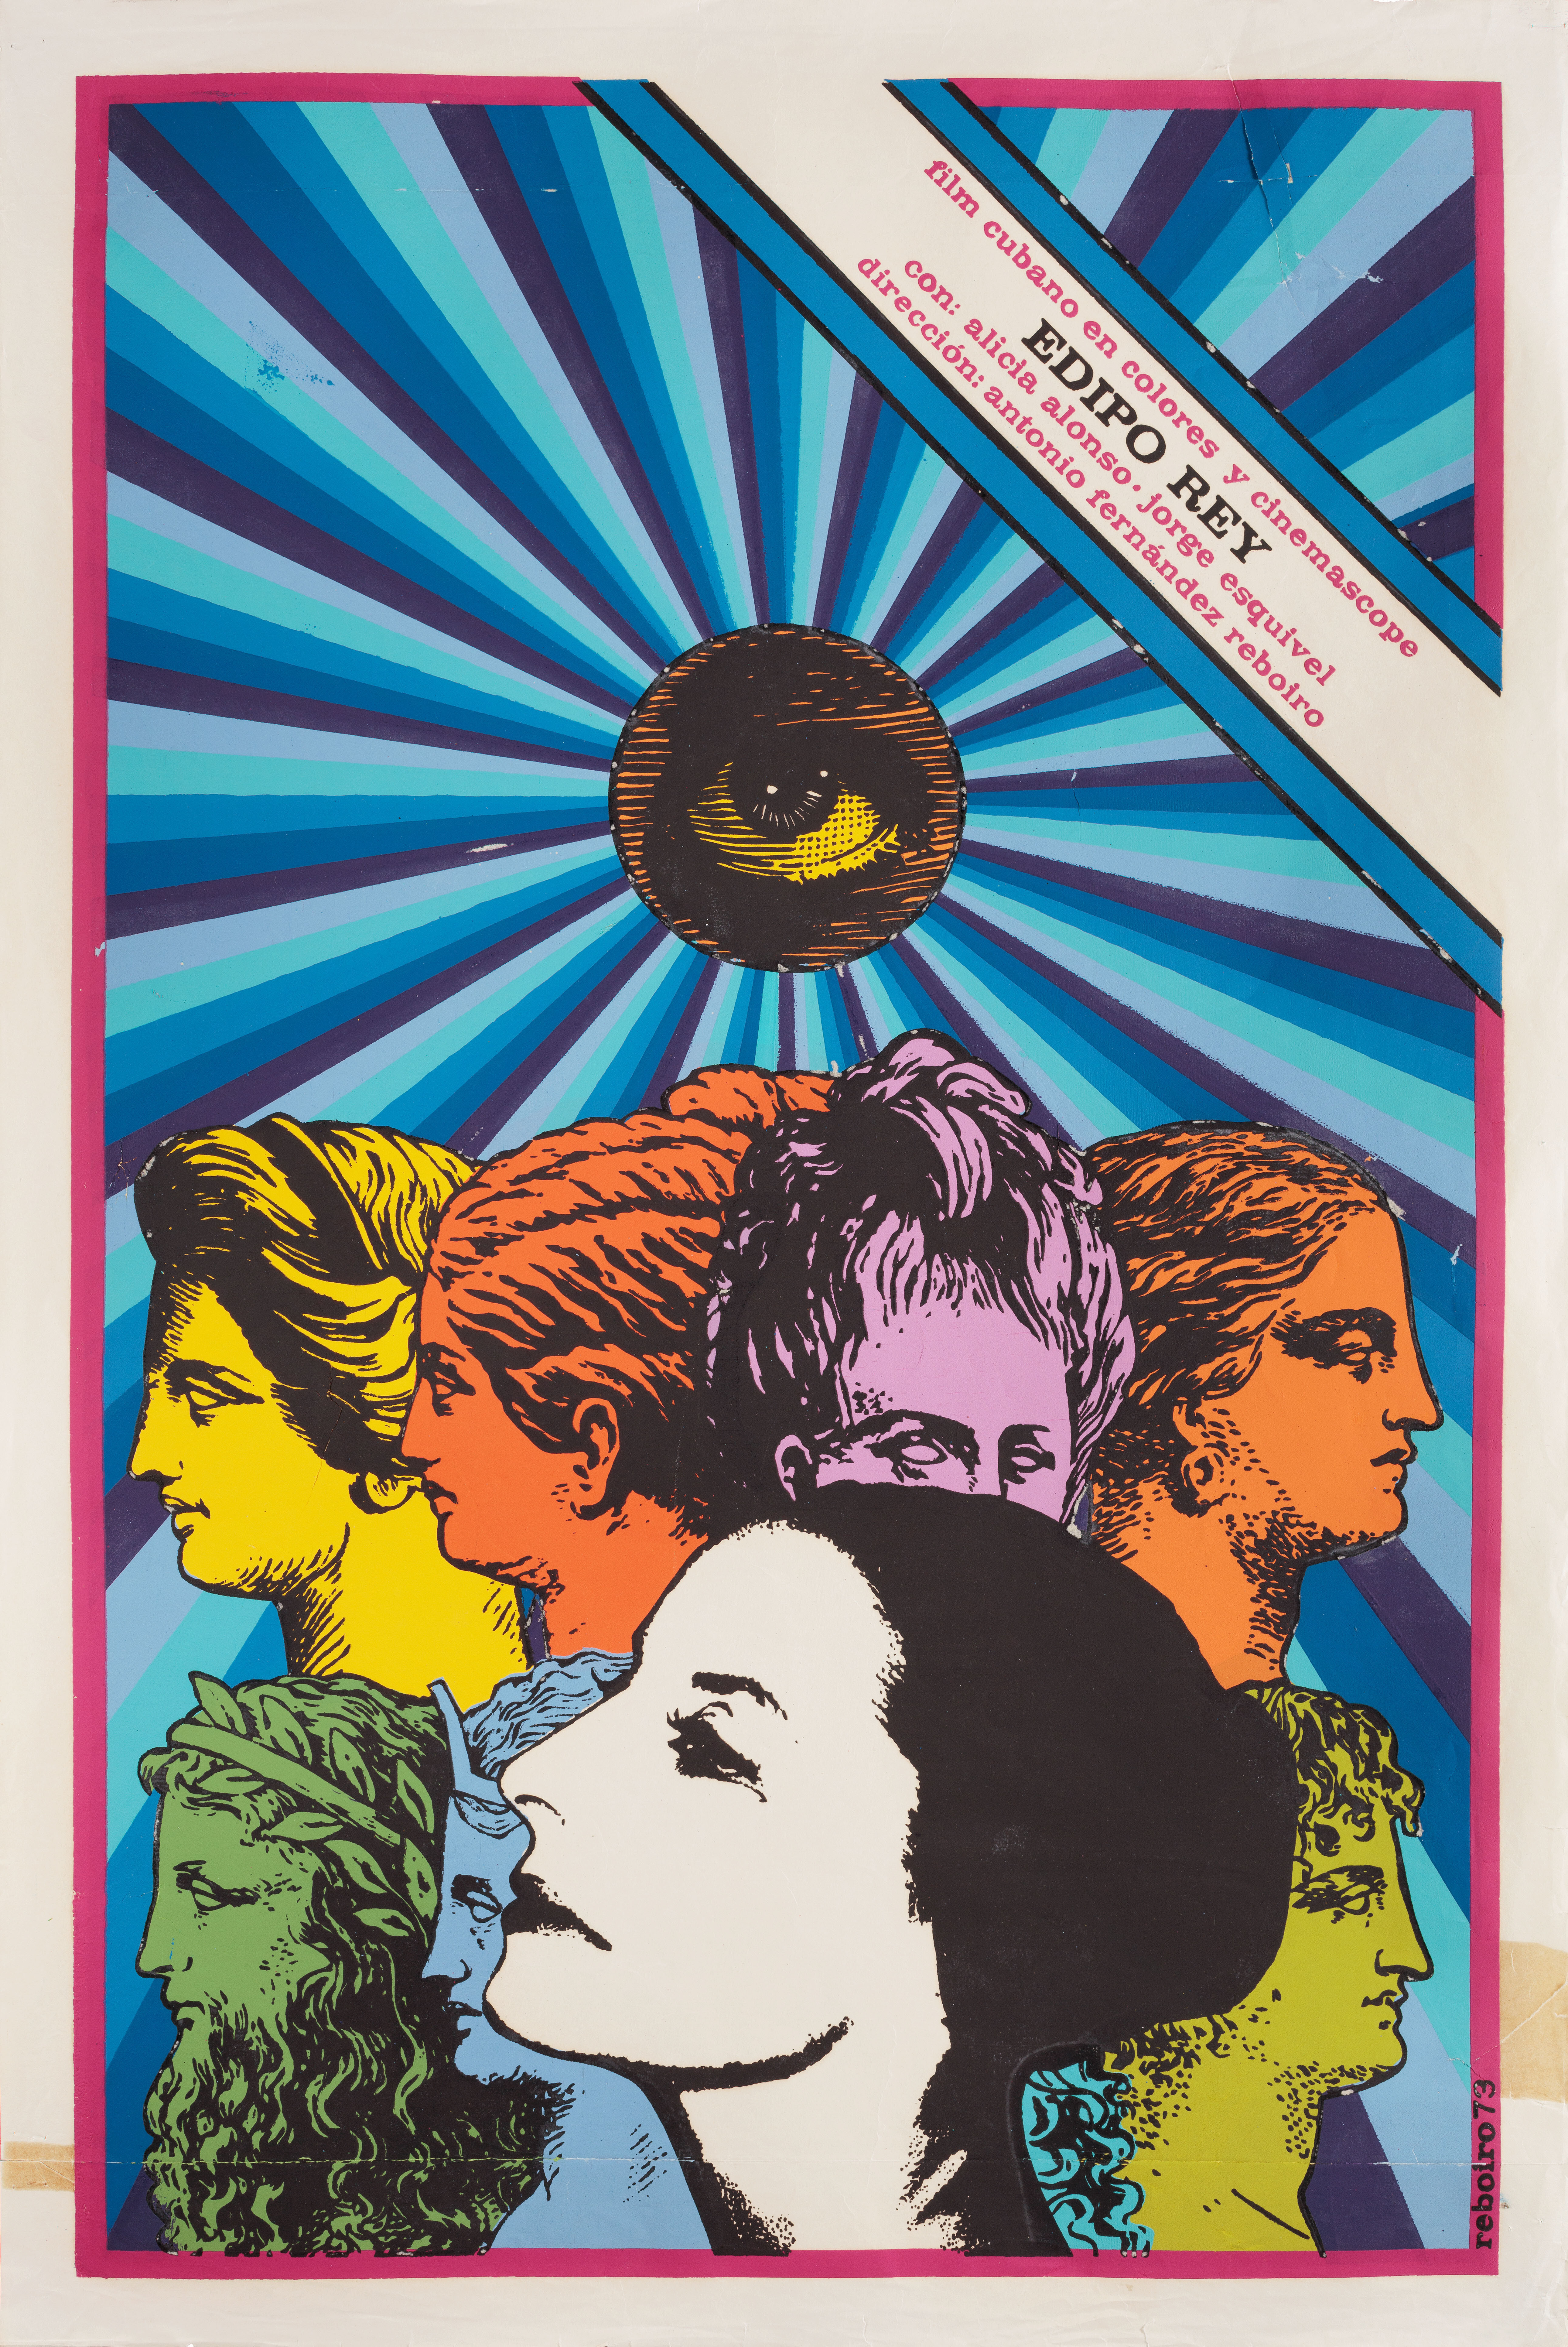 Эдипо Рей (Edipo Rey, 1973), режиссёр Антонио Фернандес Ребойро, кубинский плакат к фильму, 1973 год, автор Антонио Фернандес Ребойро